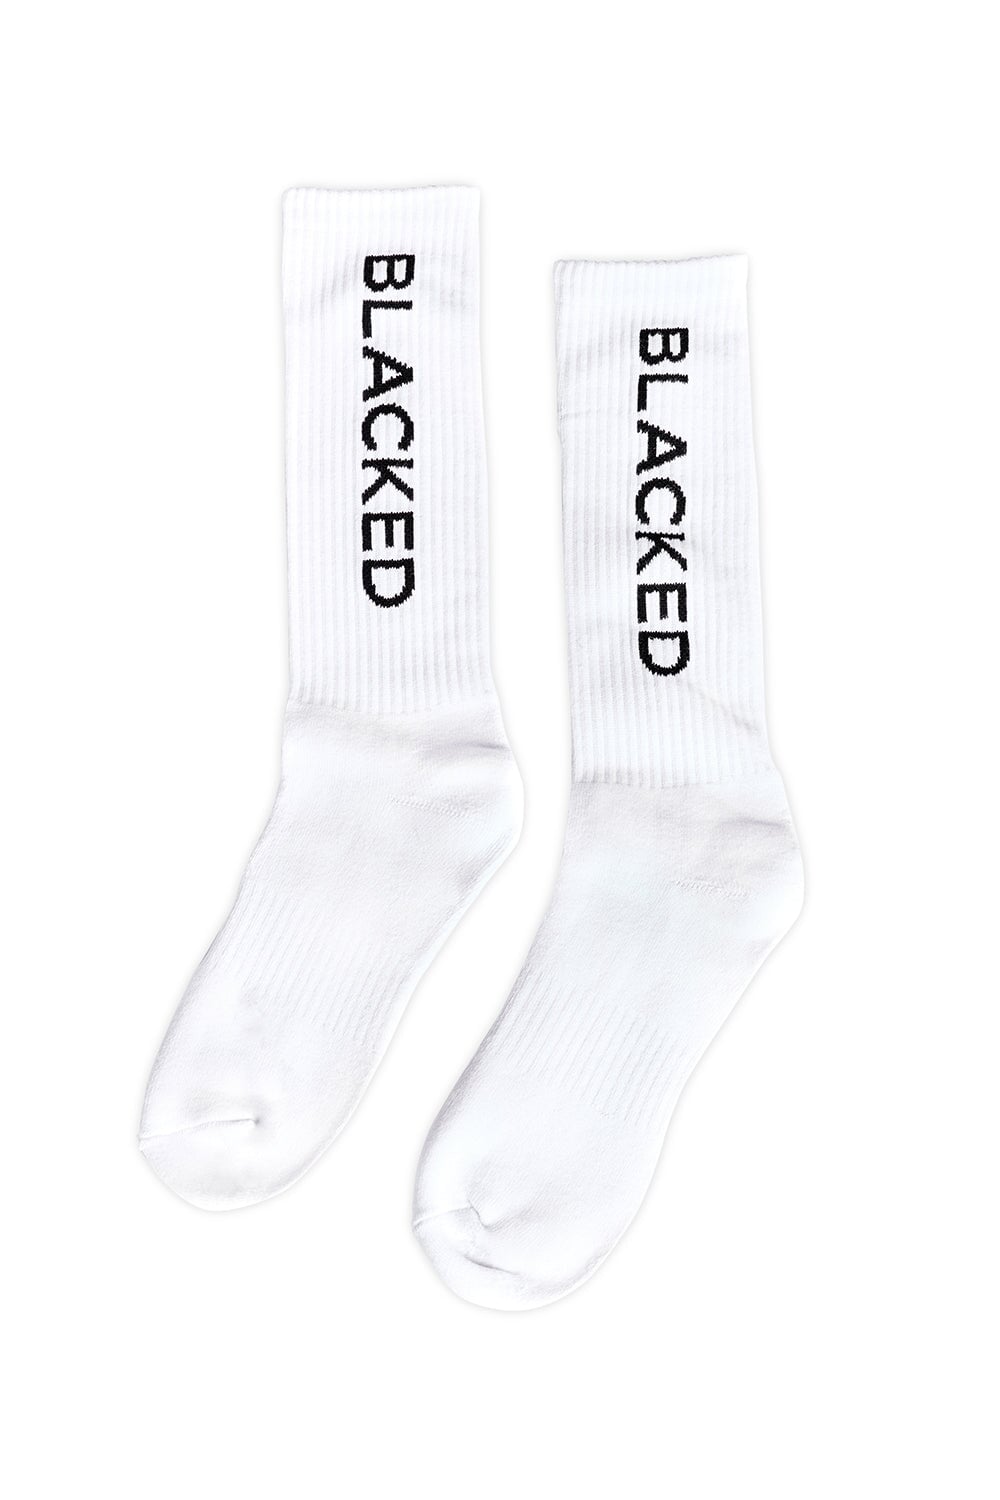 Blacked Socks Misc Blacked 